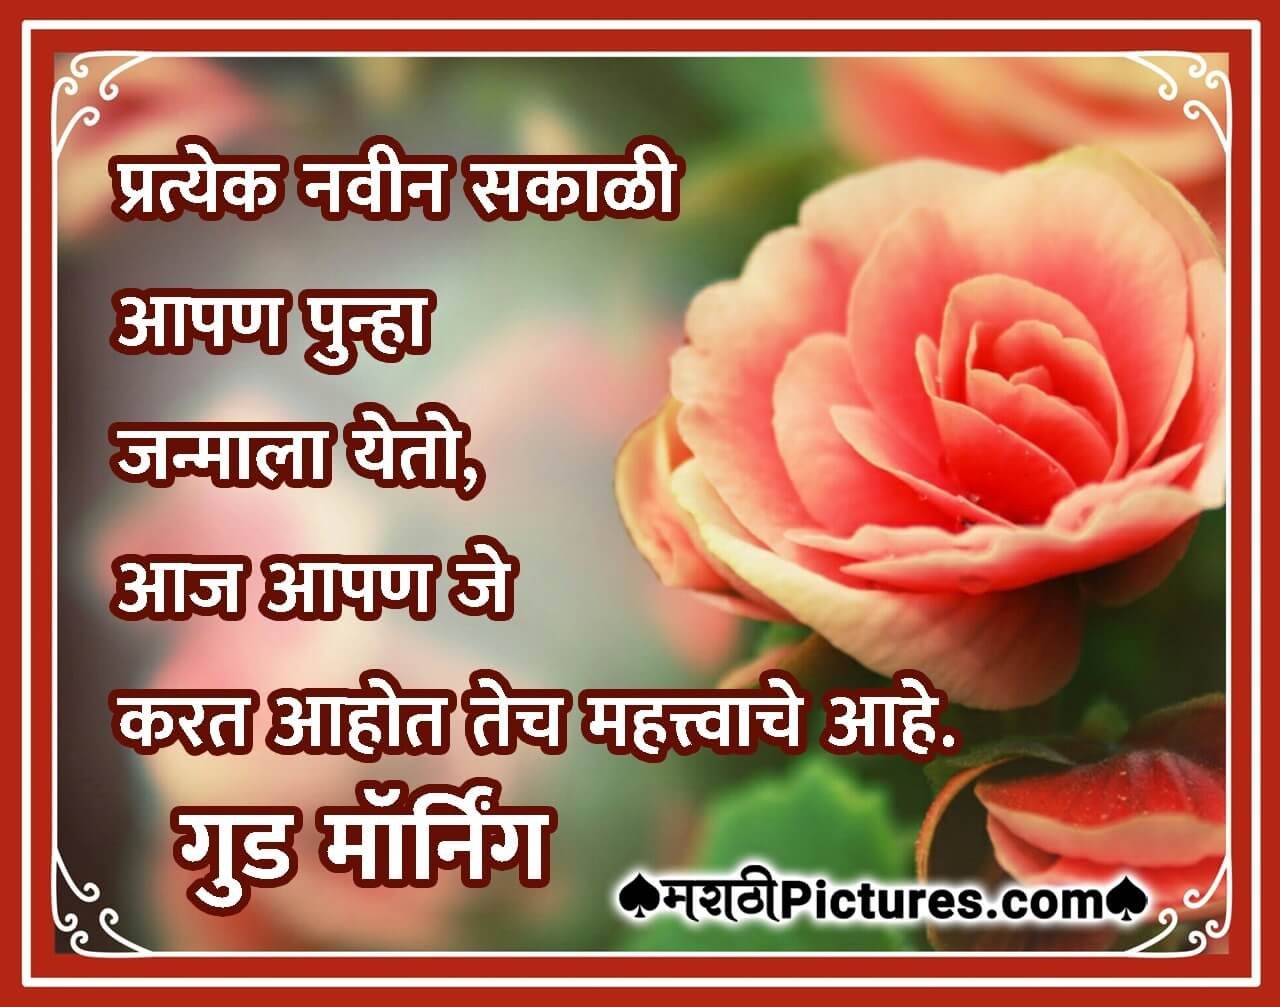 Good Morning Marathi Quote - MarathiPictures.com